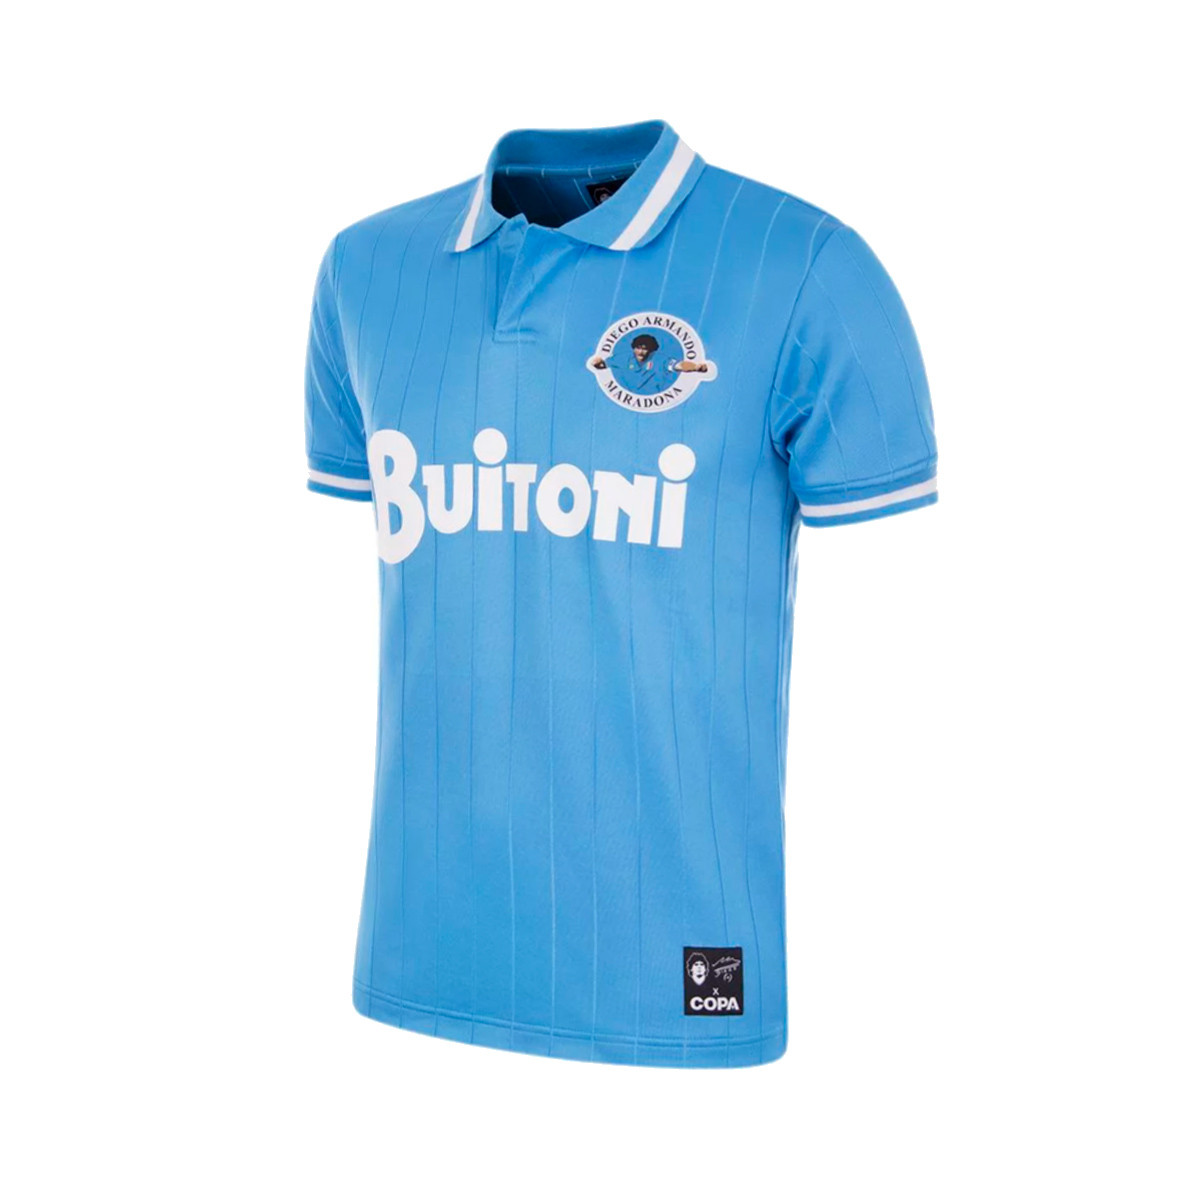 Camiseta COPA Maradona X Copa Napoli 1986 - 87 Blue Fútbol Emotion